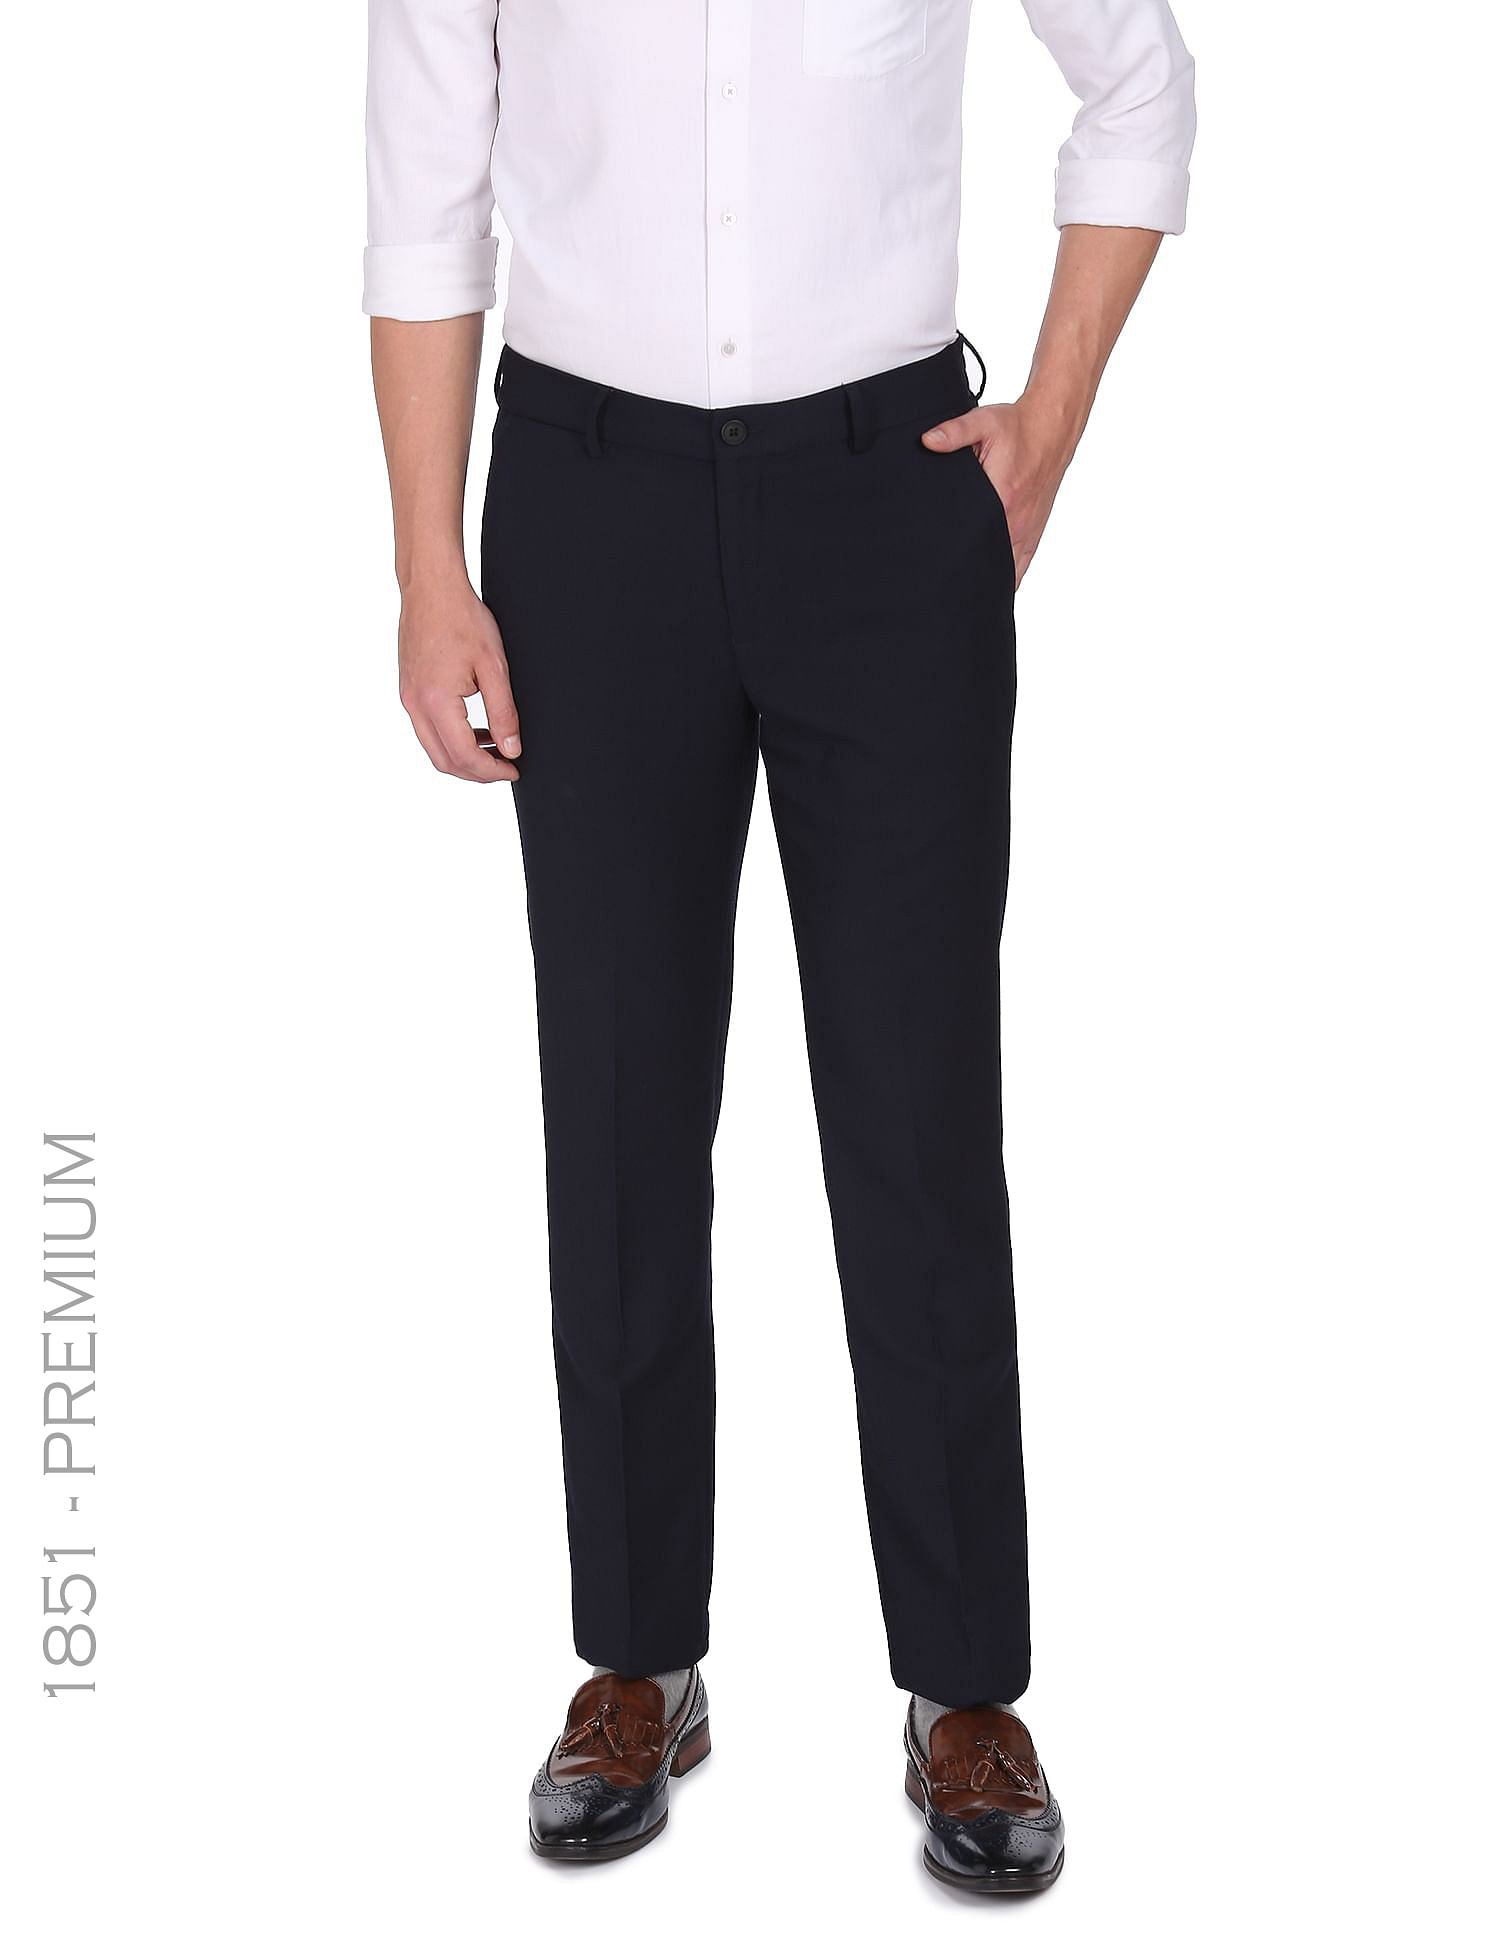 Buy Peter England Men Black Solid Super Slim Fit Casual Trousers online